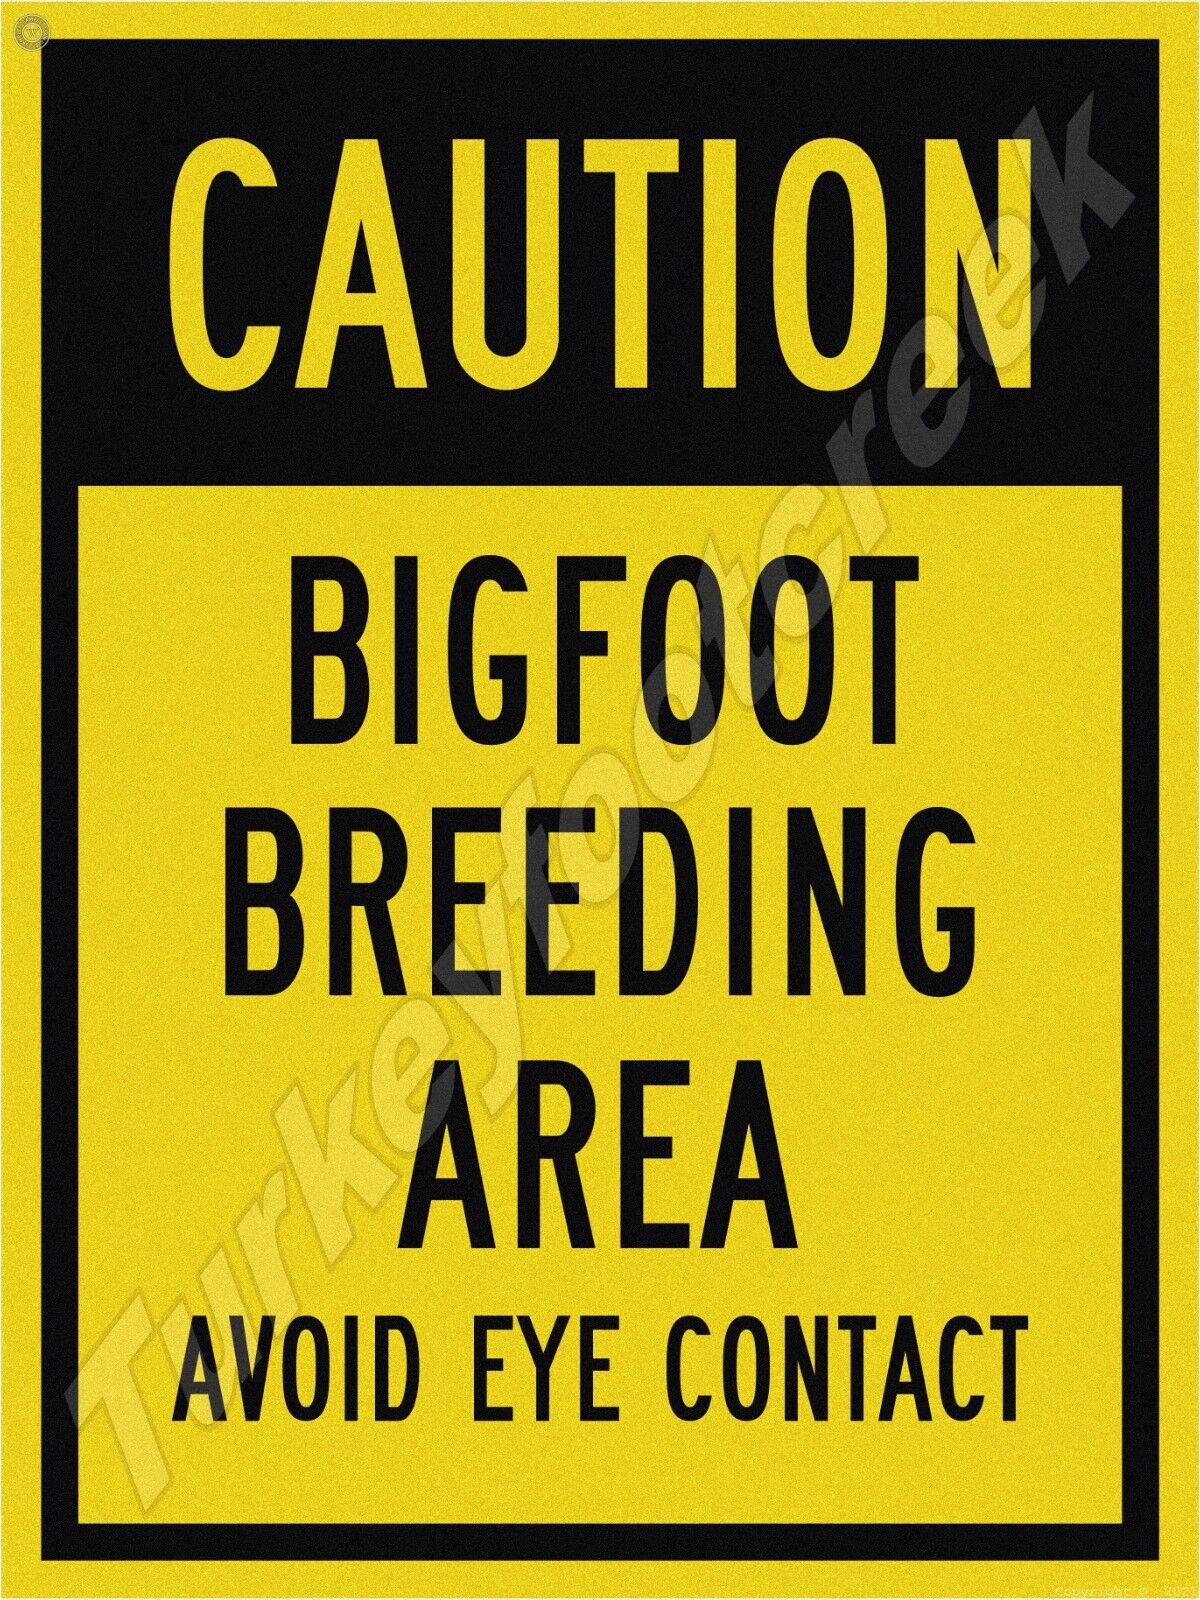 Caution Bigfoot Breeding Area 18